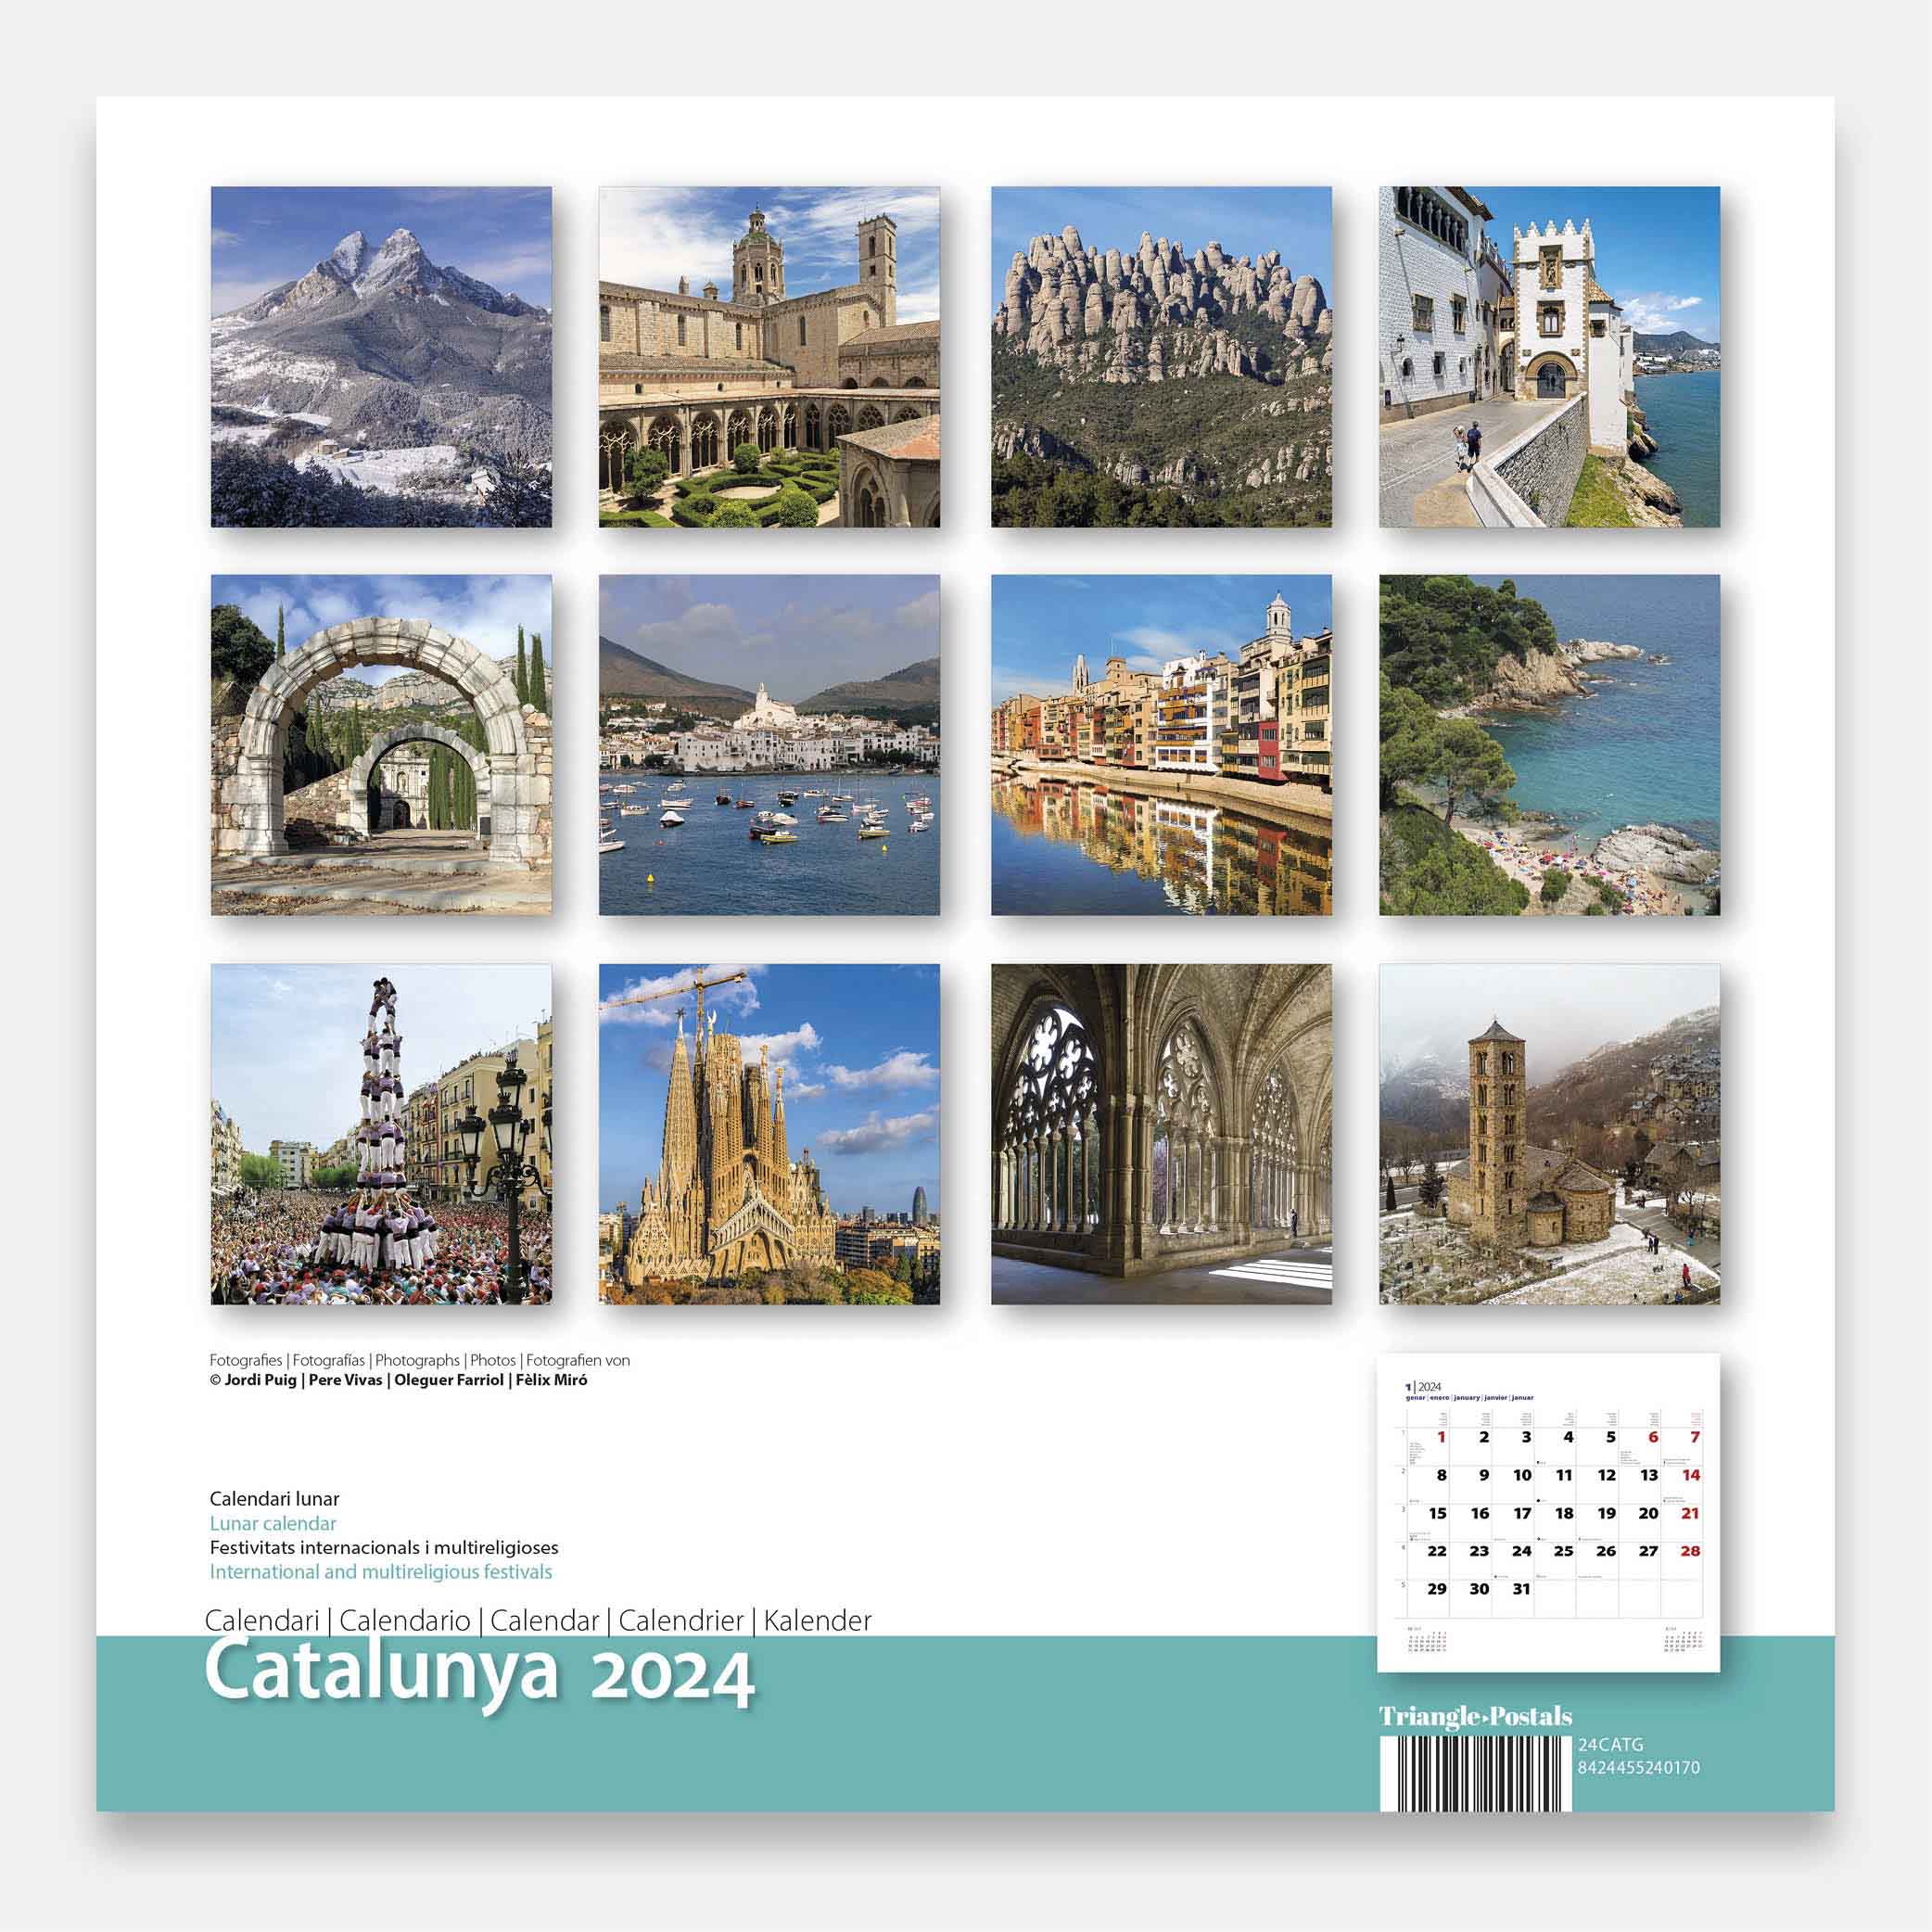 Catalogne 24catg2 calendario pared 2024 catalunya cataluna catalonia